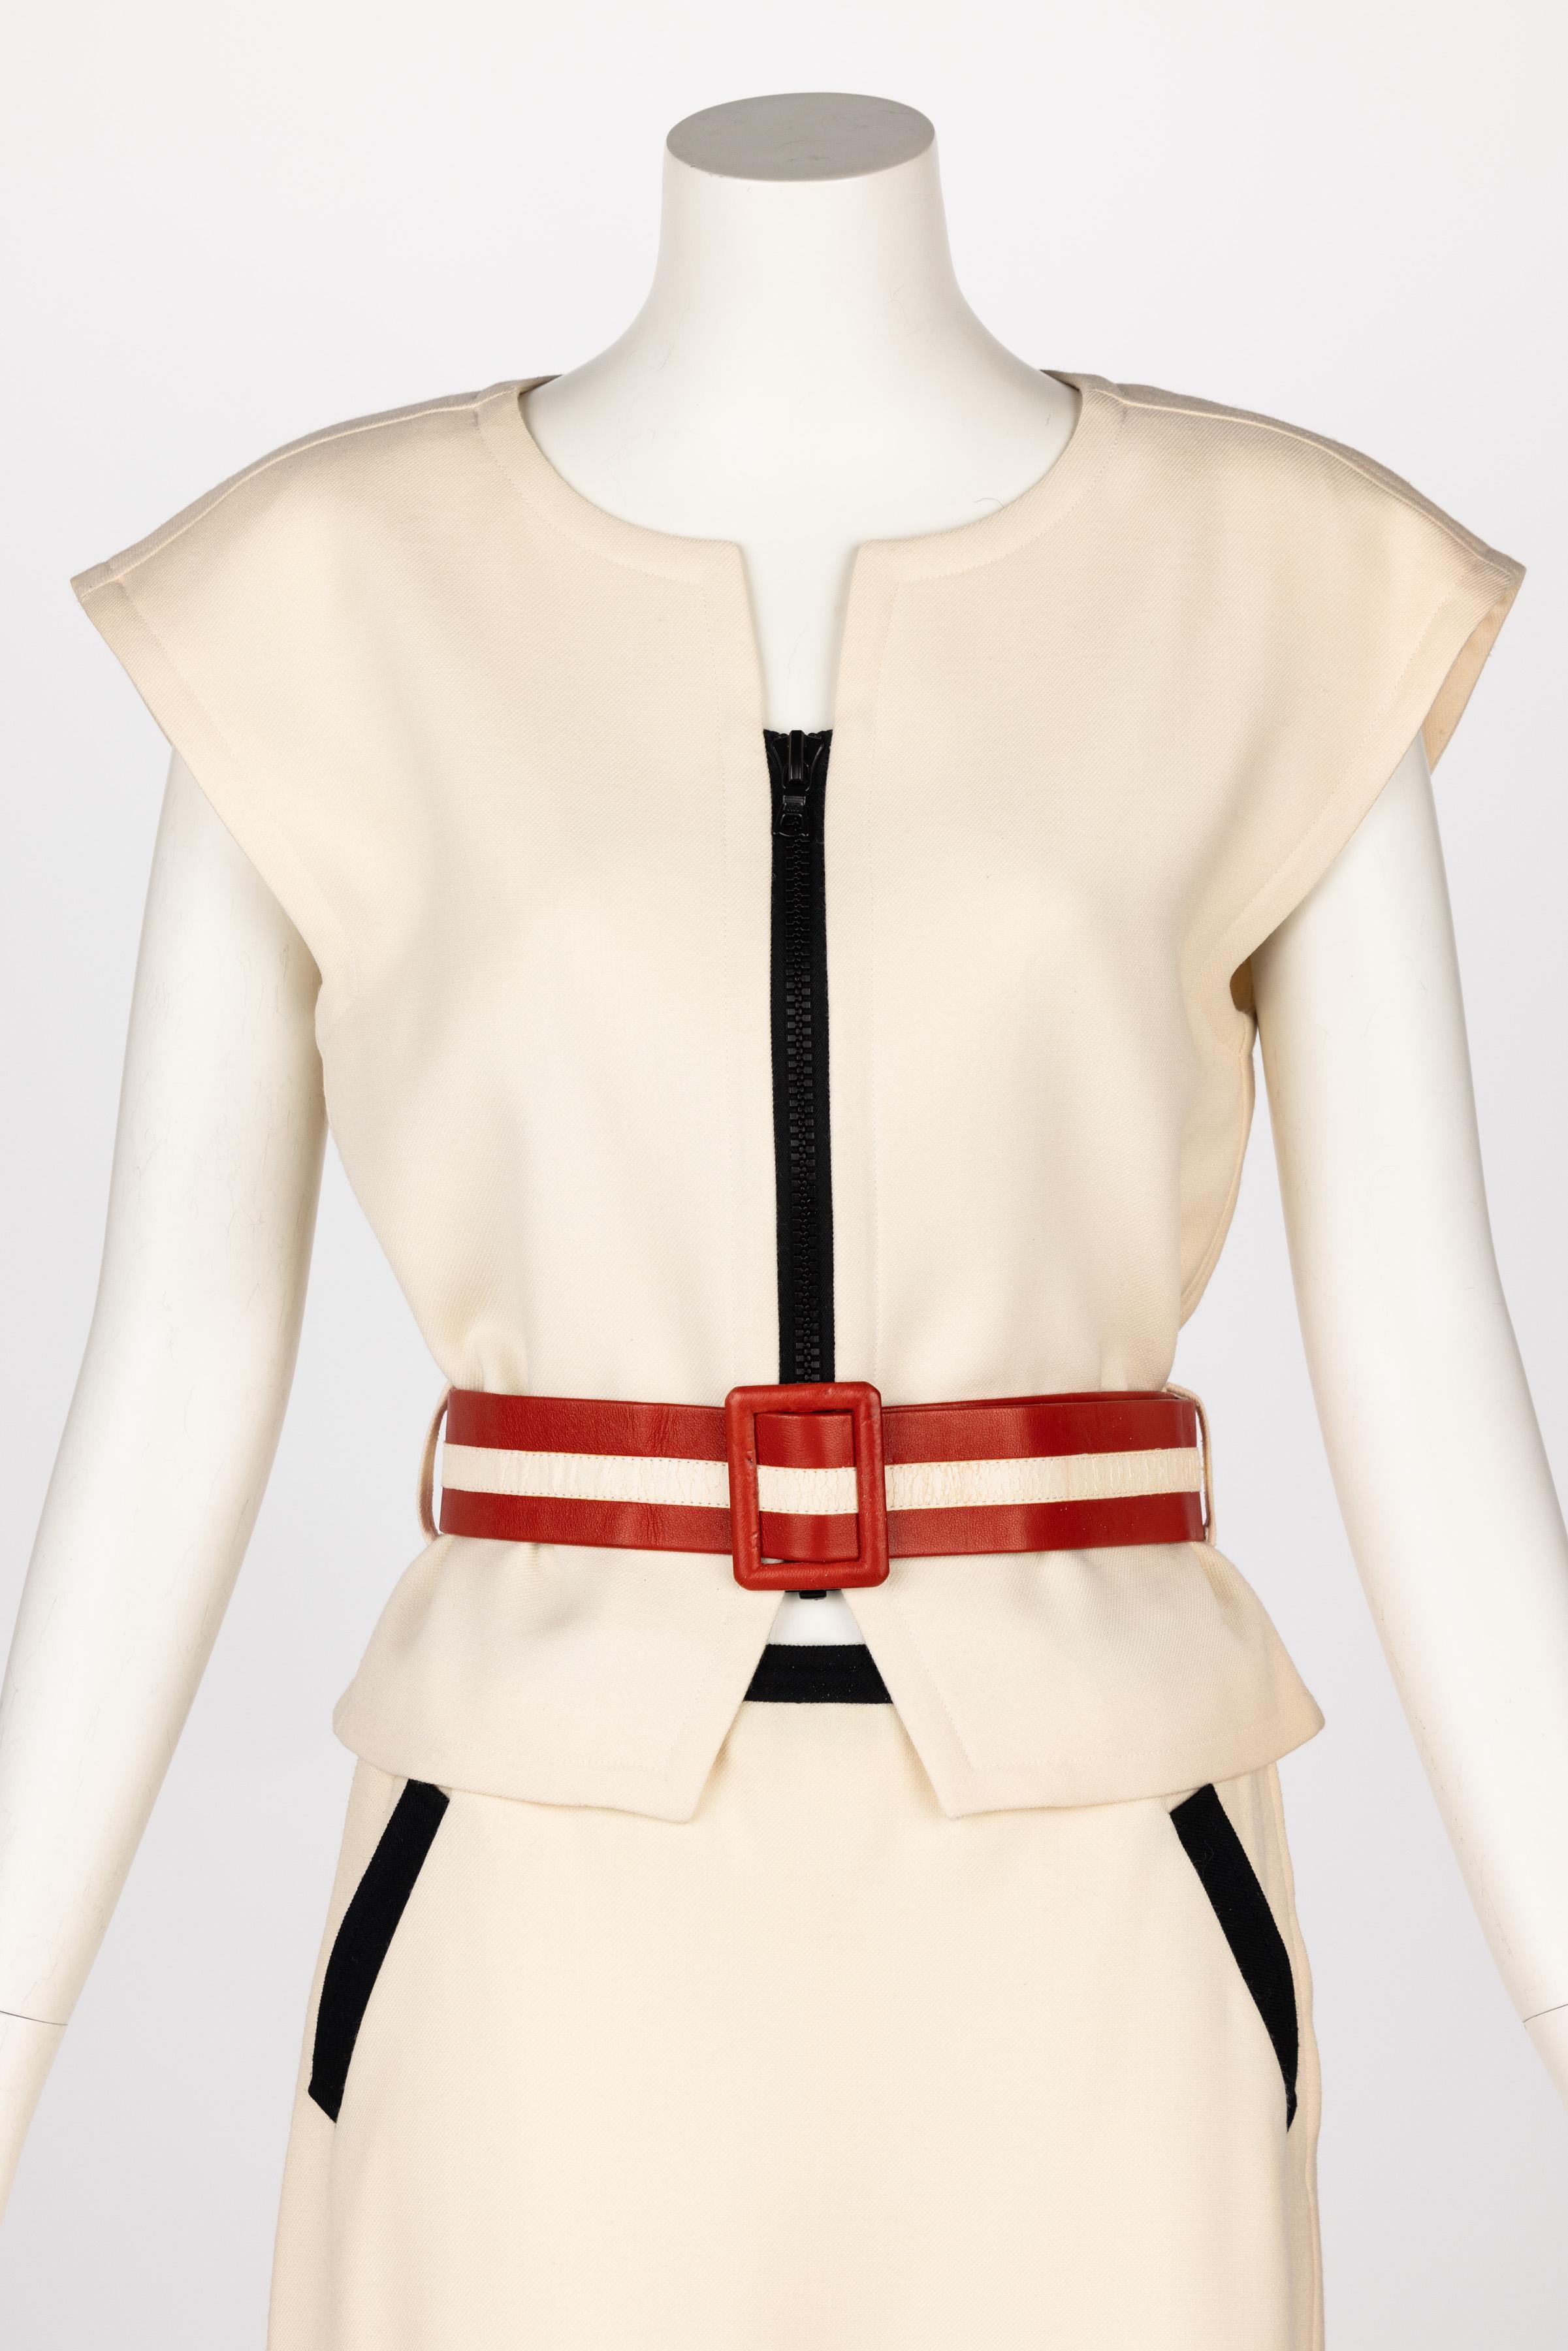 VIintage Courrèges Paris Ivory Wool Belted Jacket & Skirt For Sale 1